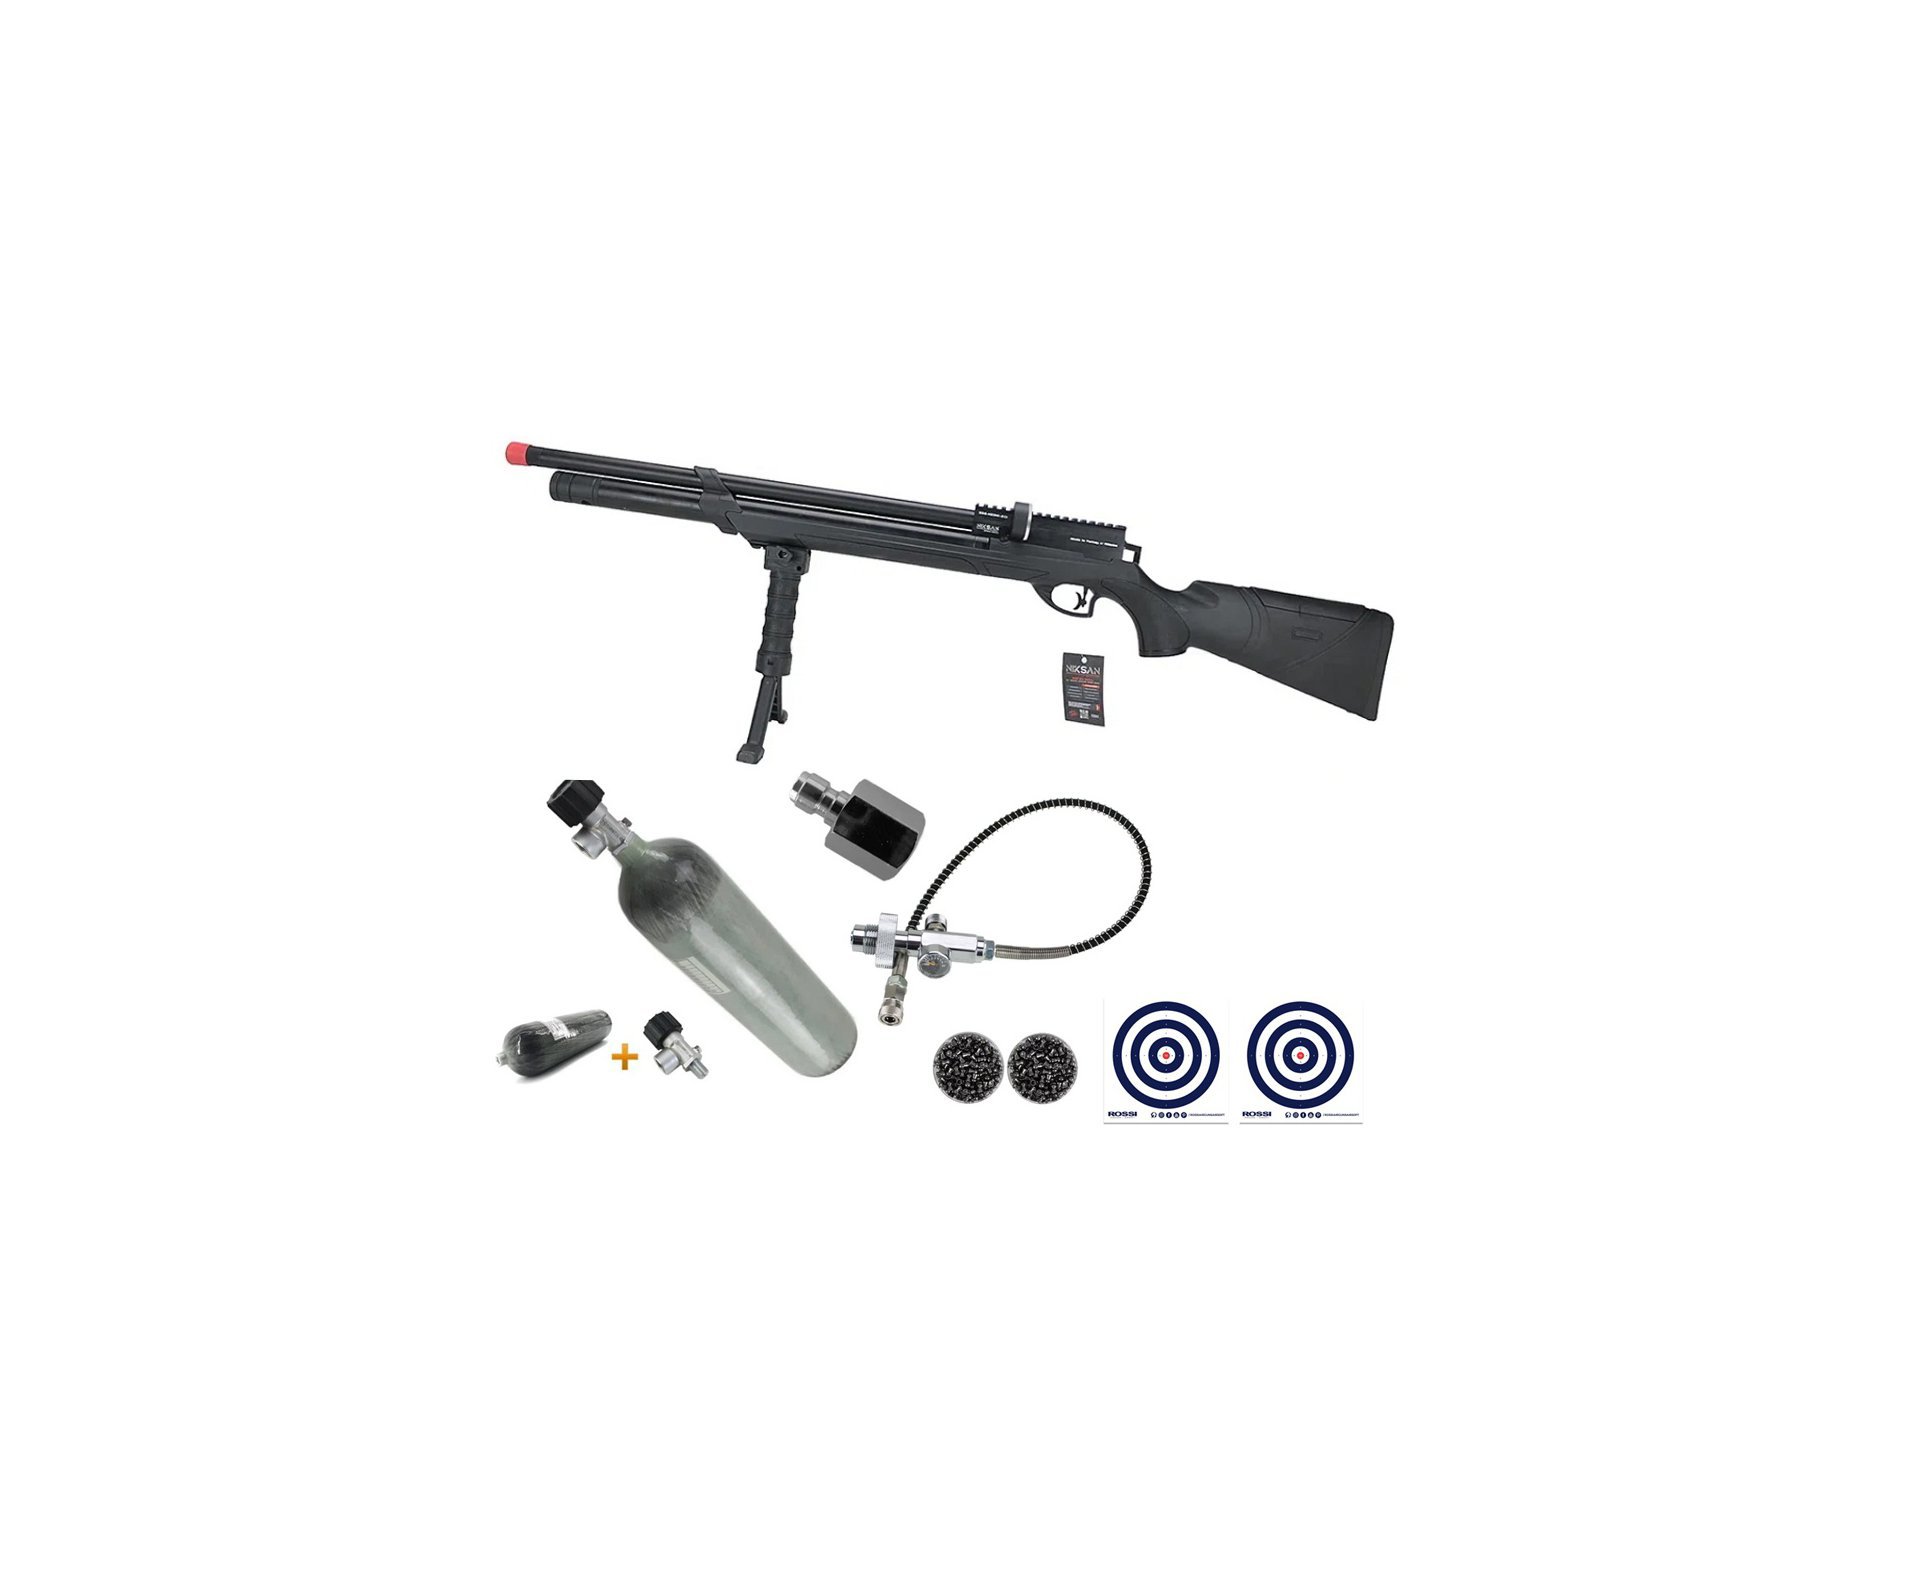 Carabina de Pressão PCP NKS Archero S 5,5mm - Niksan Defense + Scuba 3L 300bar + 2 Caixas de Chumbo + Alvos